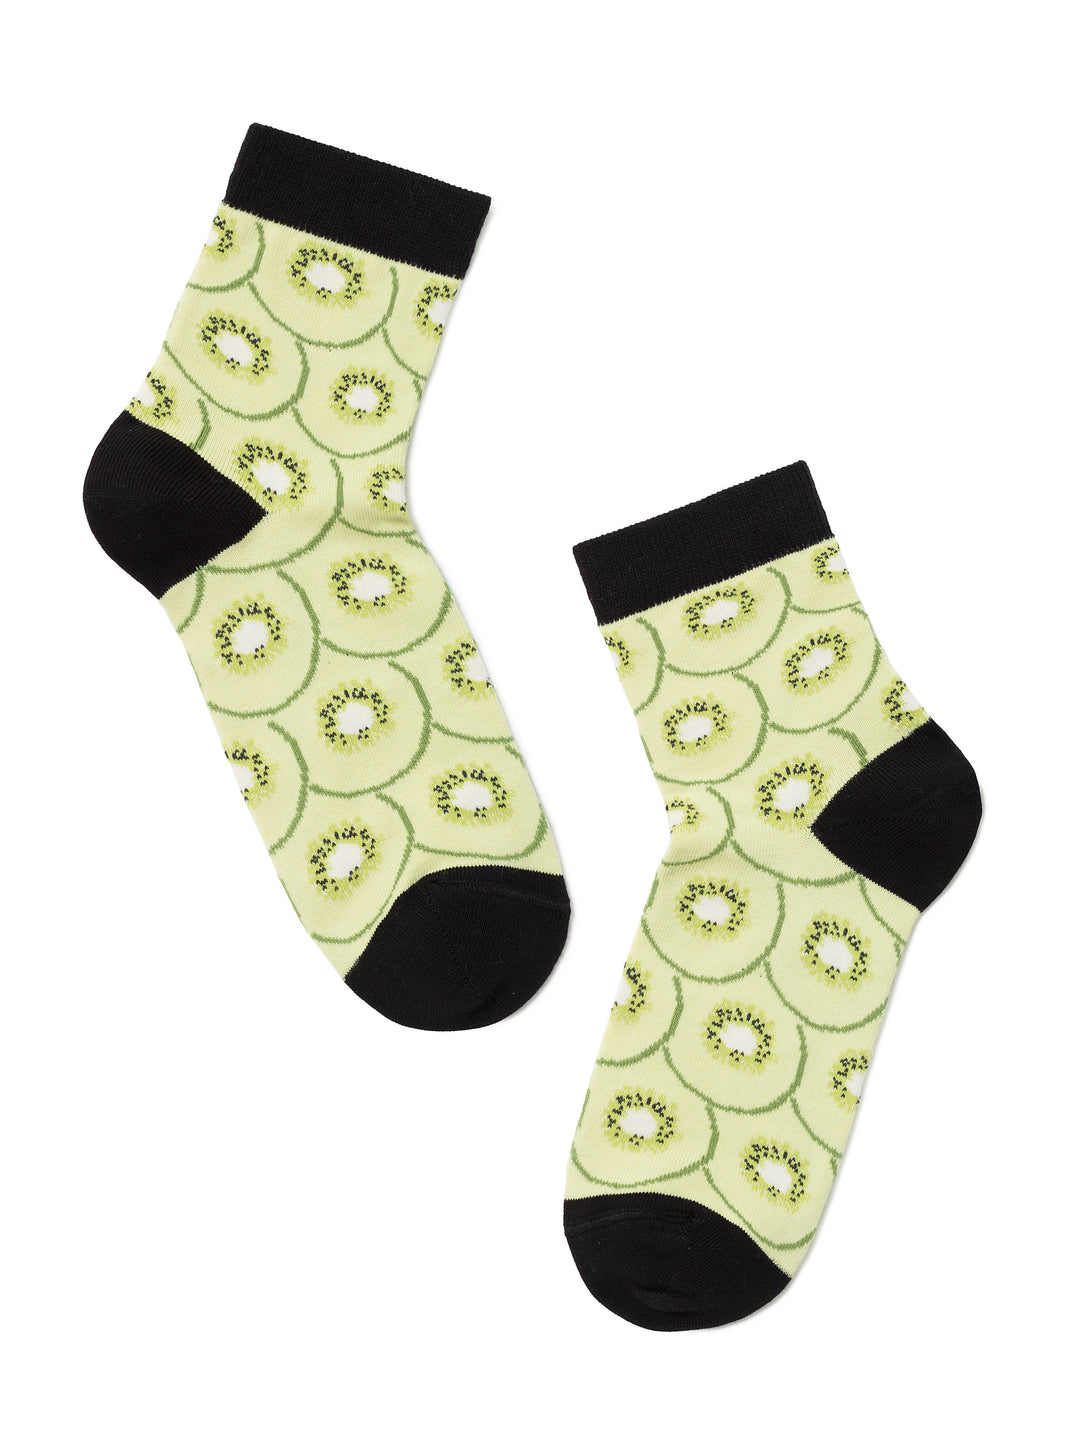 Conte Elegant Cotton Socks (2 pairs) - Fruit pattern